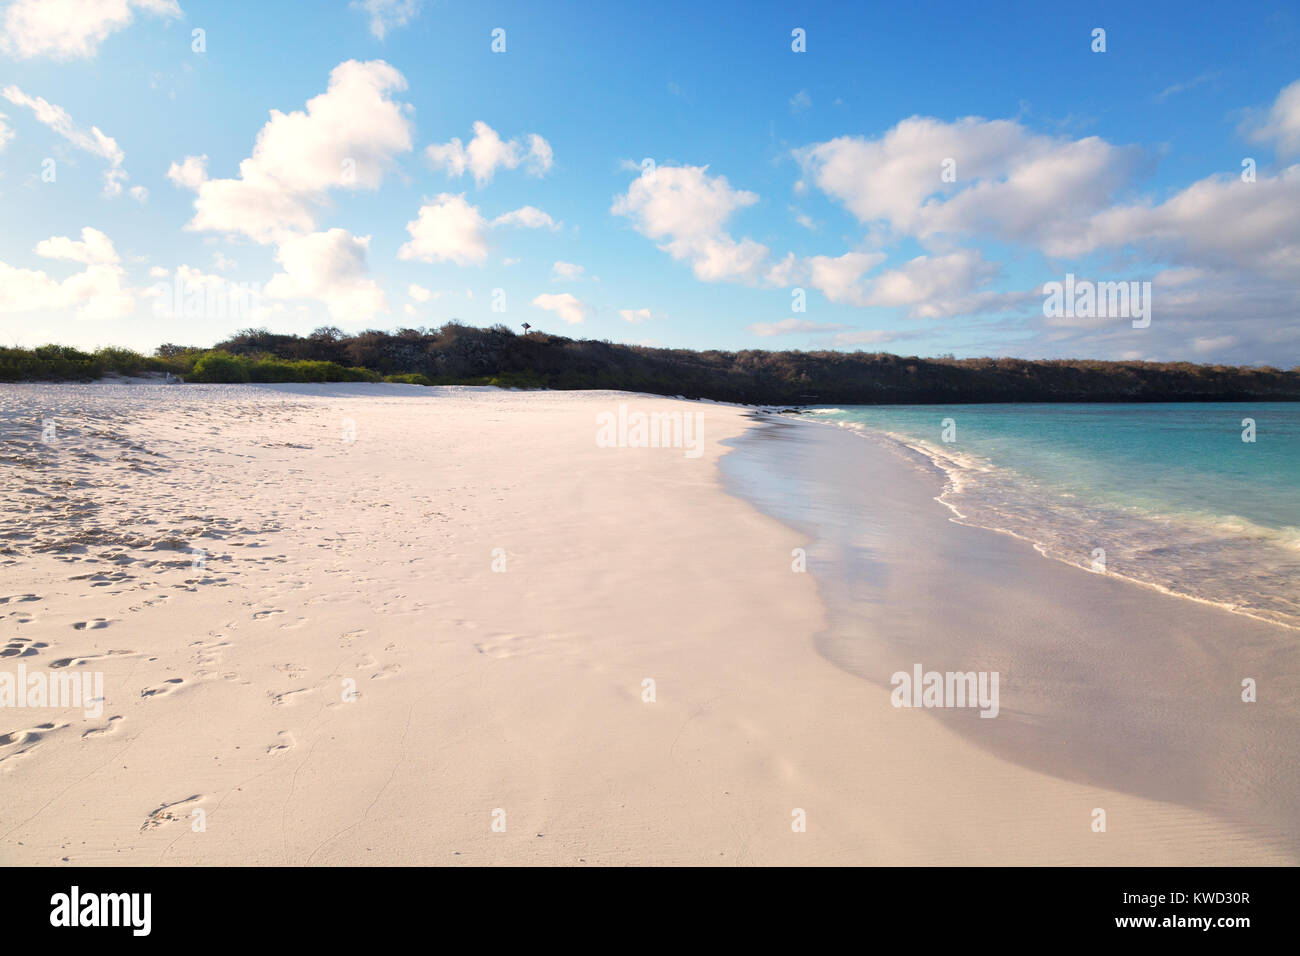 Gardner Bay Beach, Espanola Island, Insel (Haube), Galapagos, Ecuador Südamerika Stockfoto